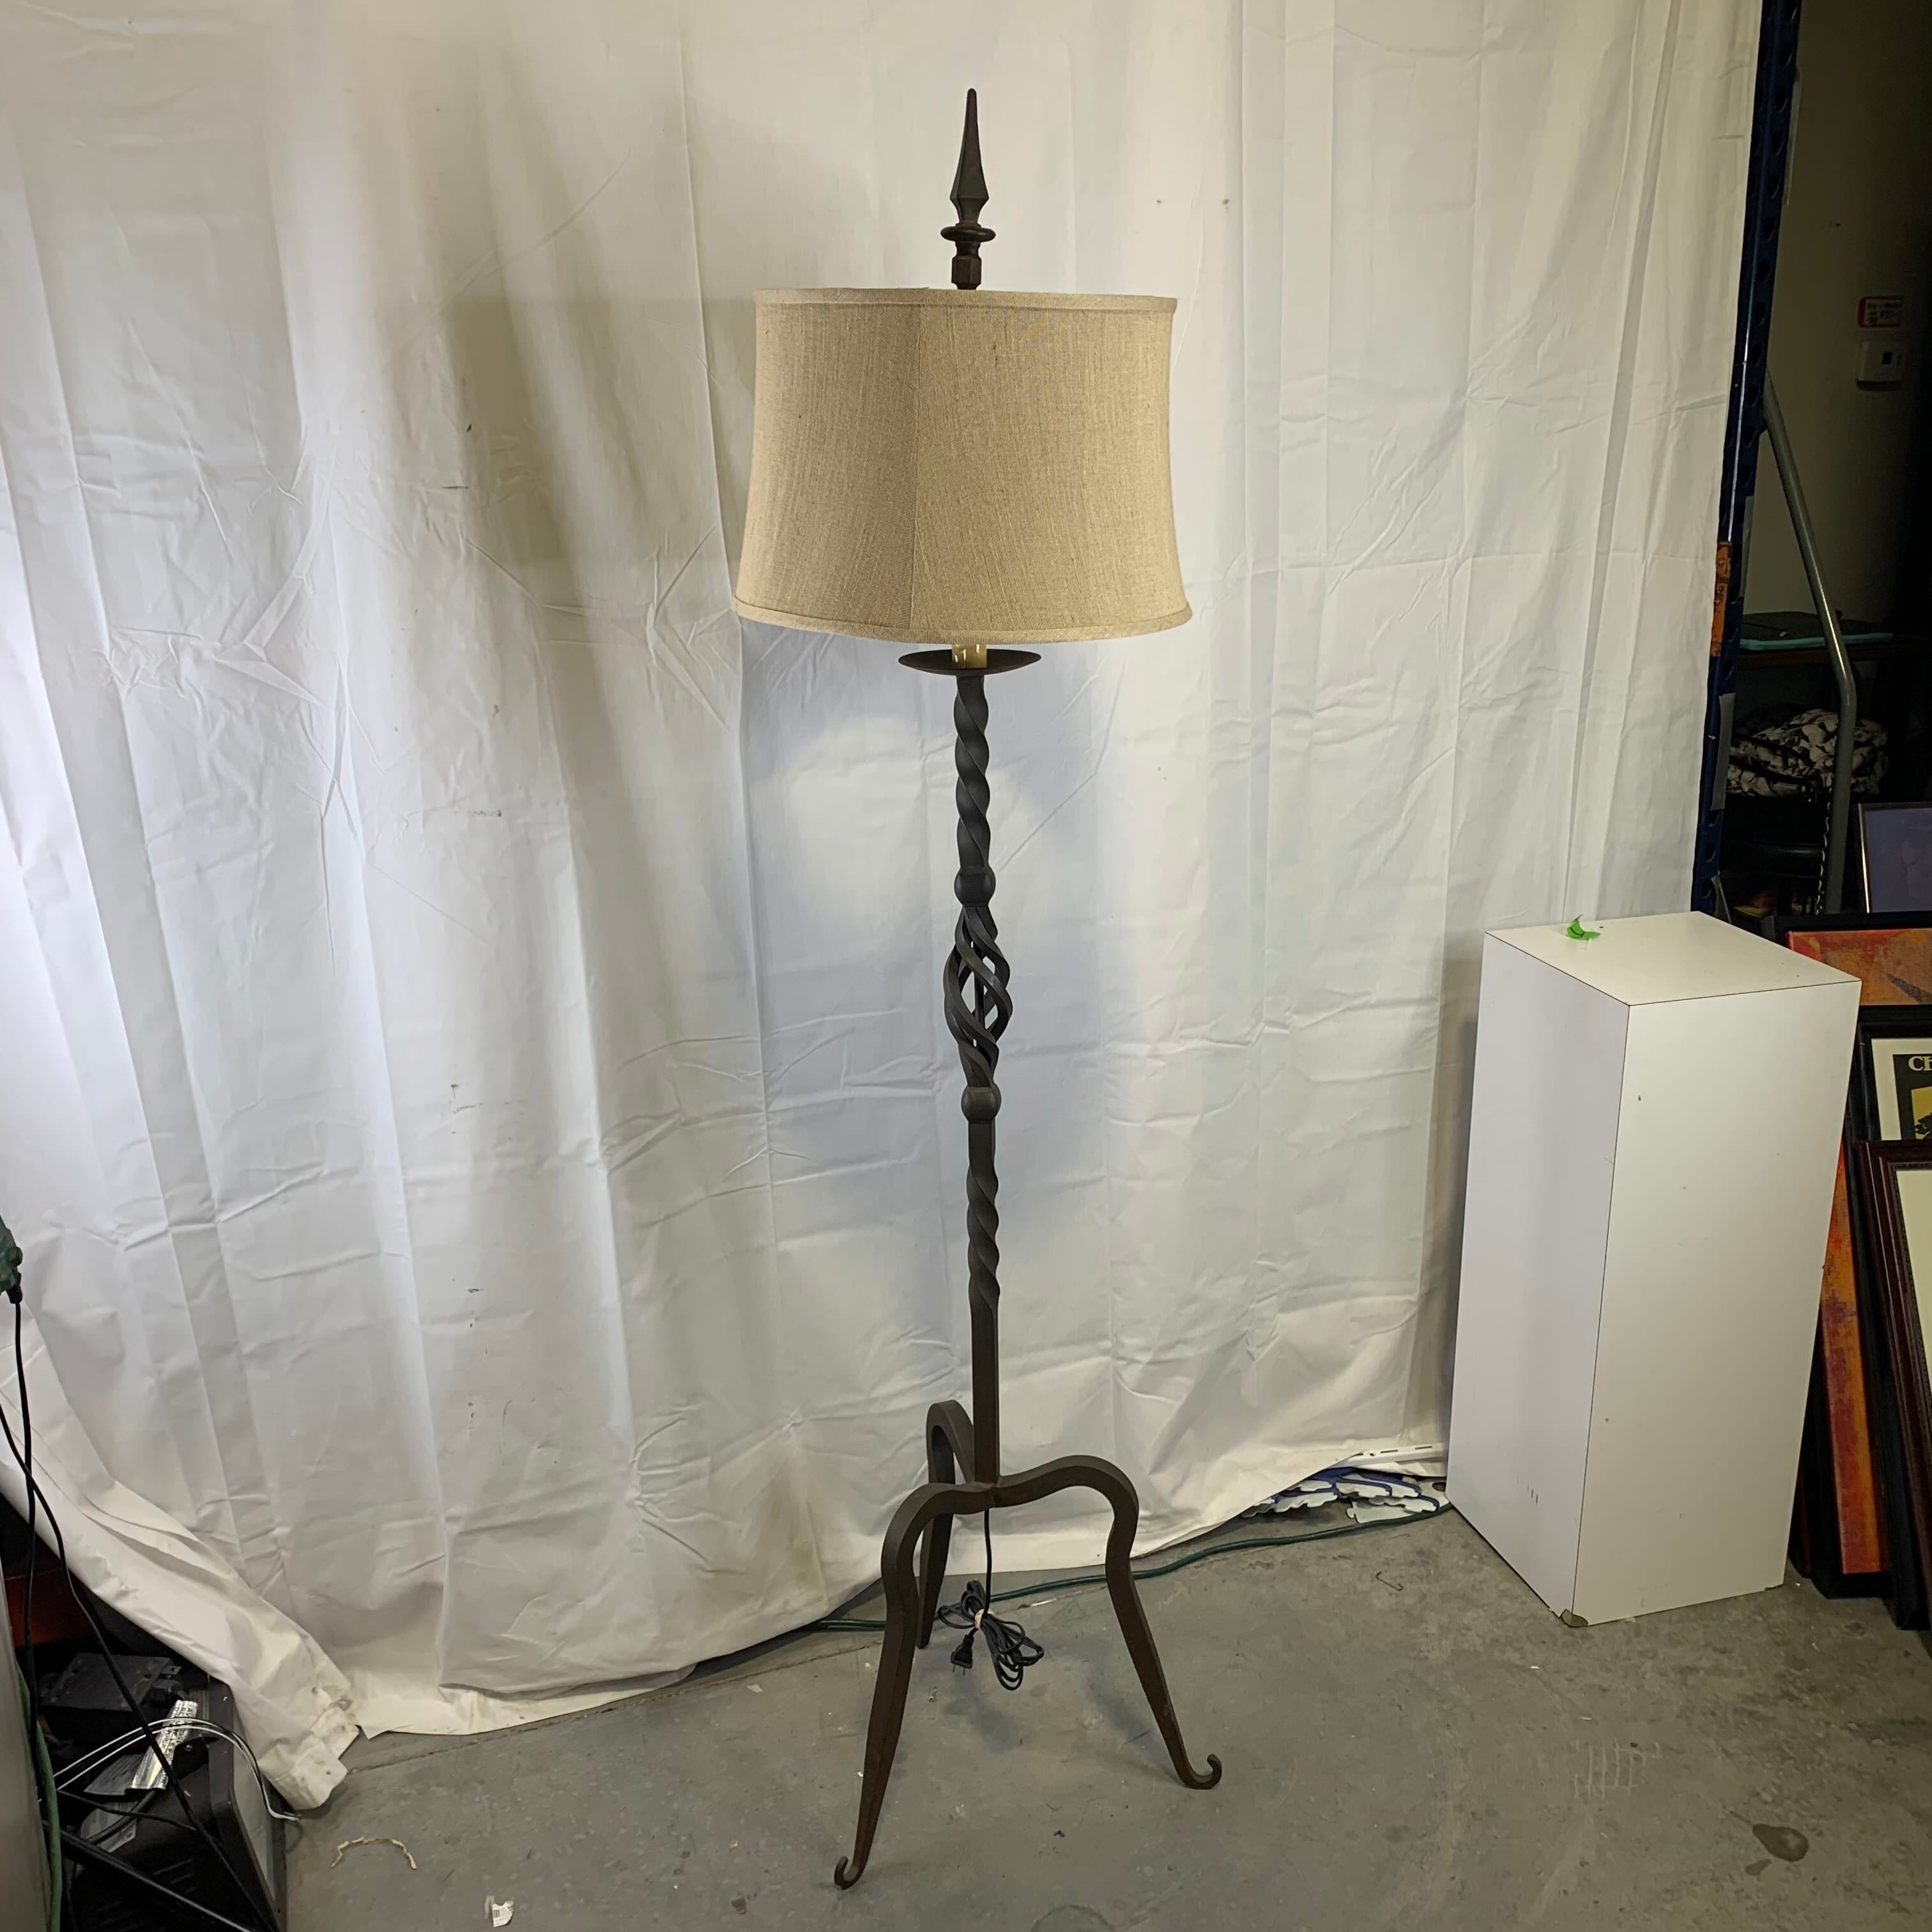 17" Diameter x 68" Iron Twist Three Legged with Shade Floor Lamp